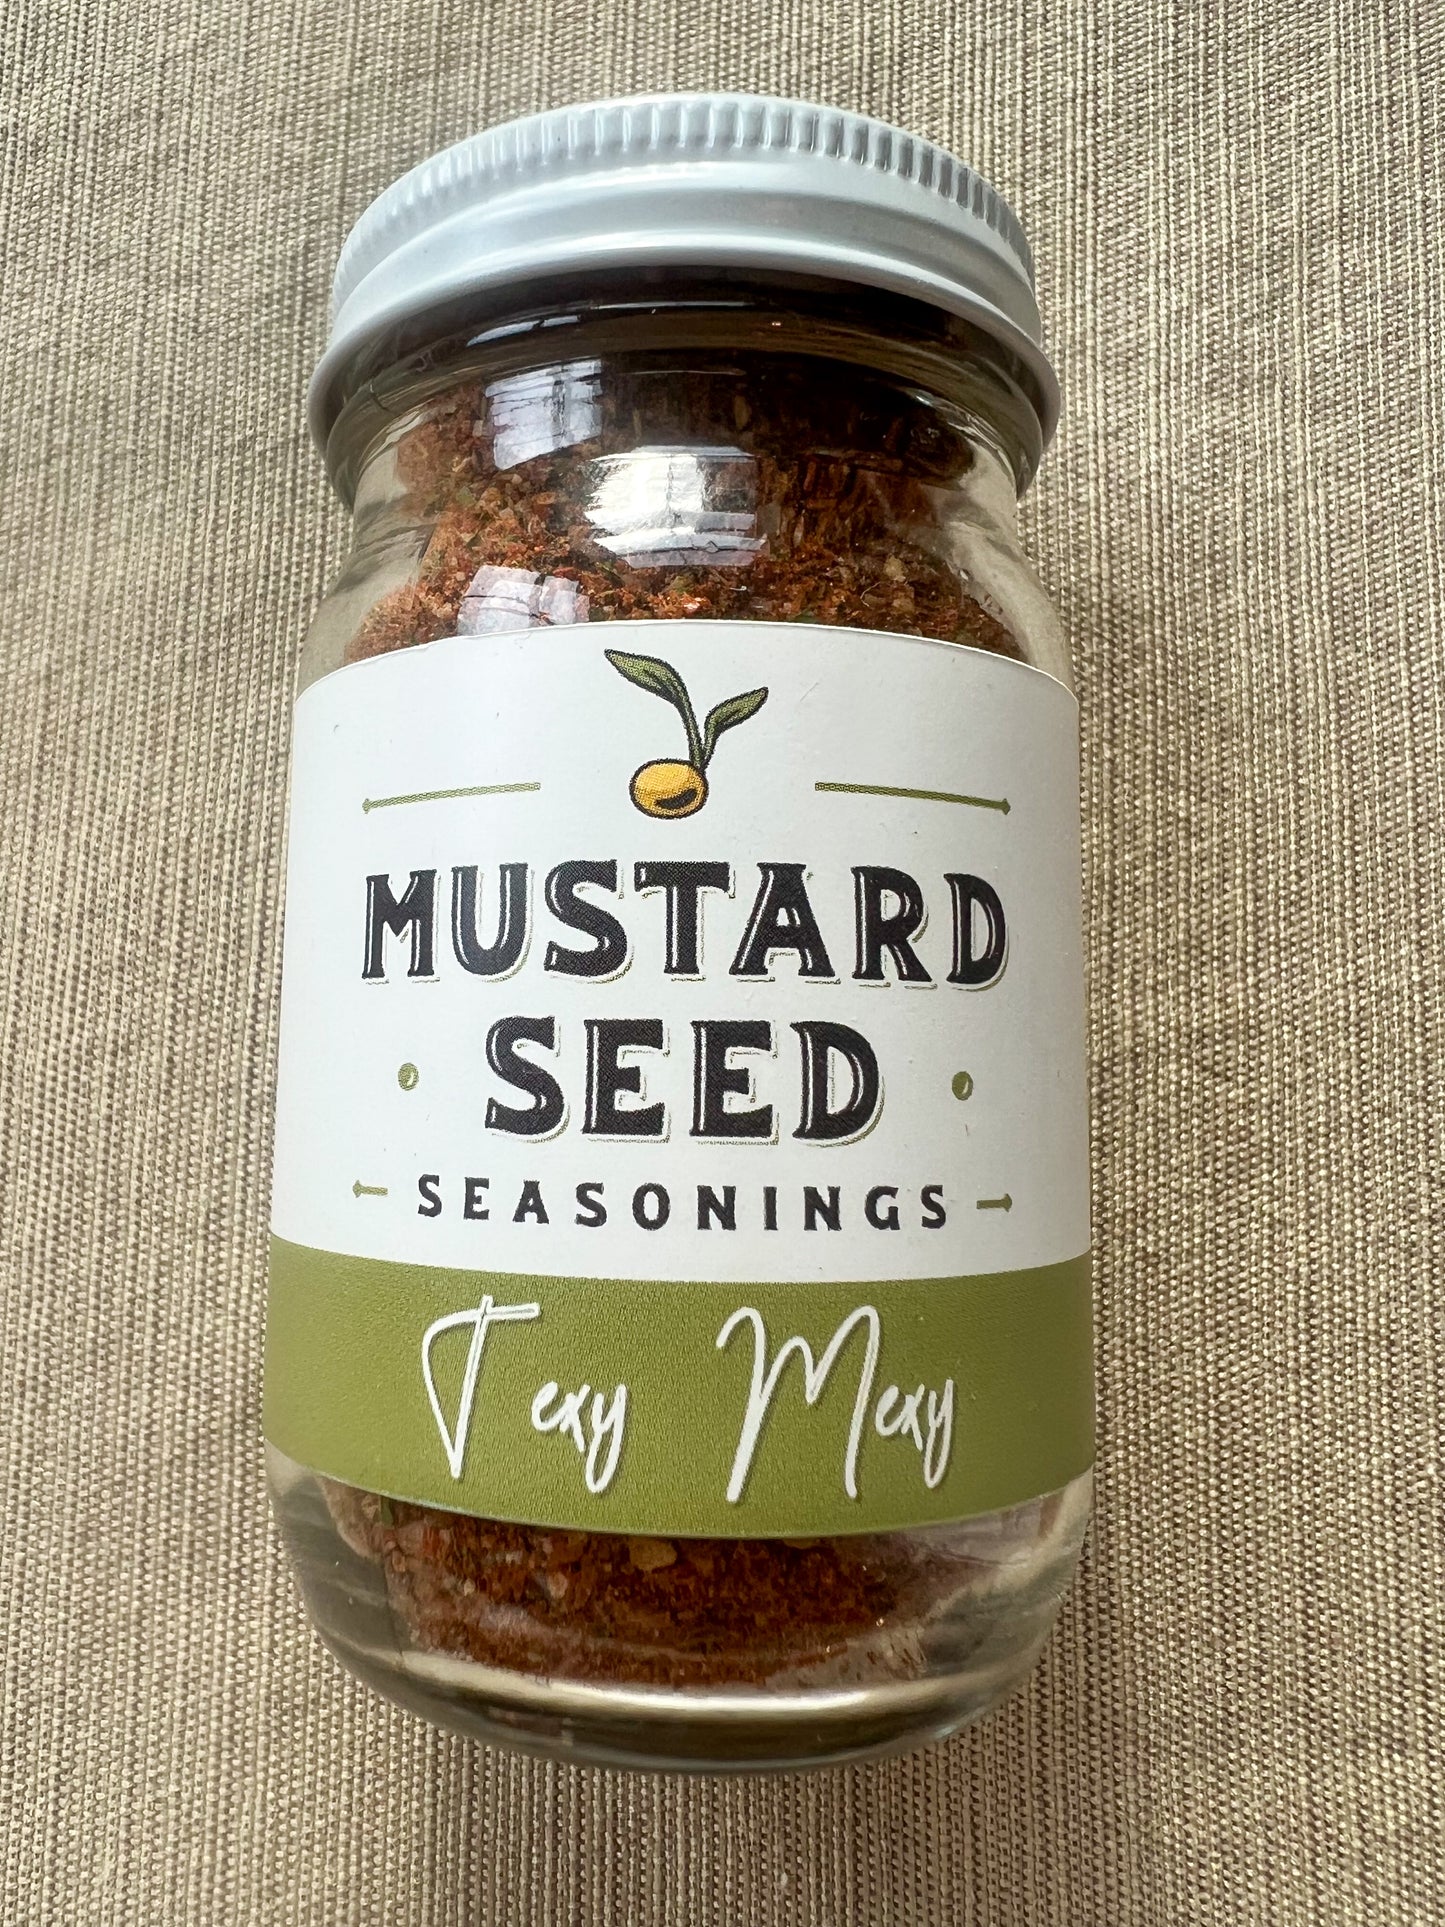 Texy-Mexy Seasoning Blend